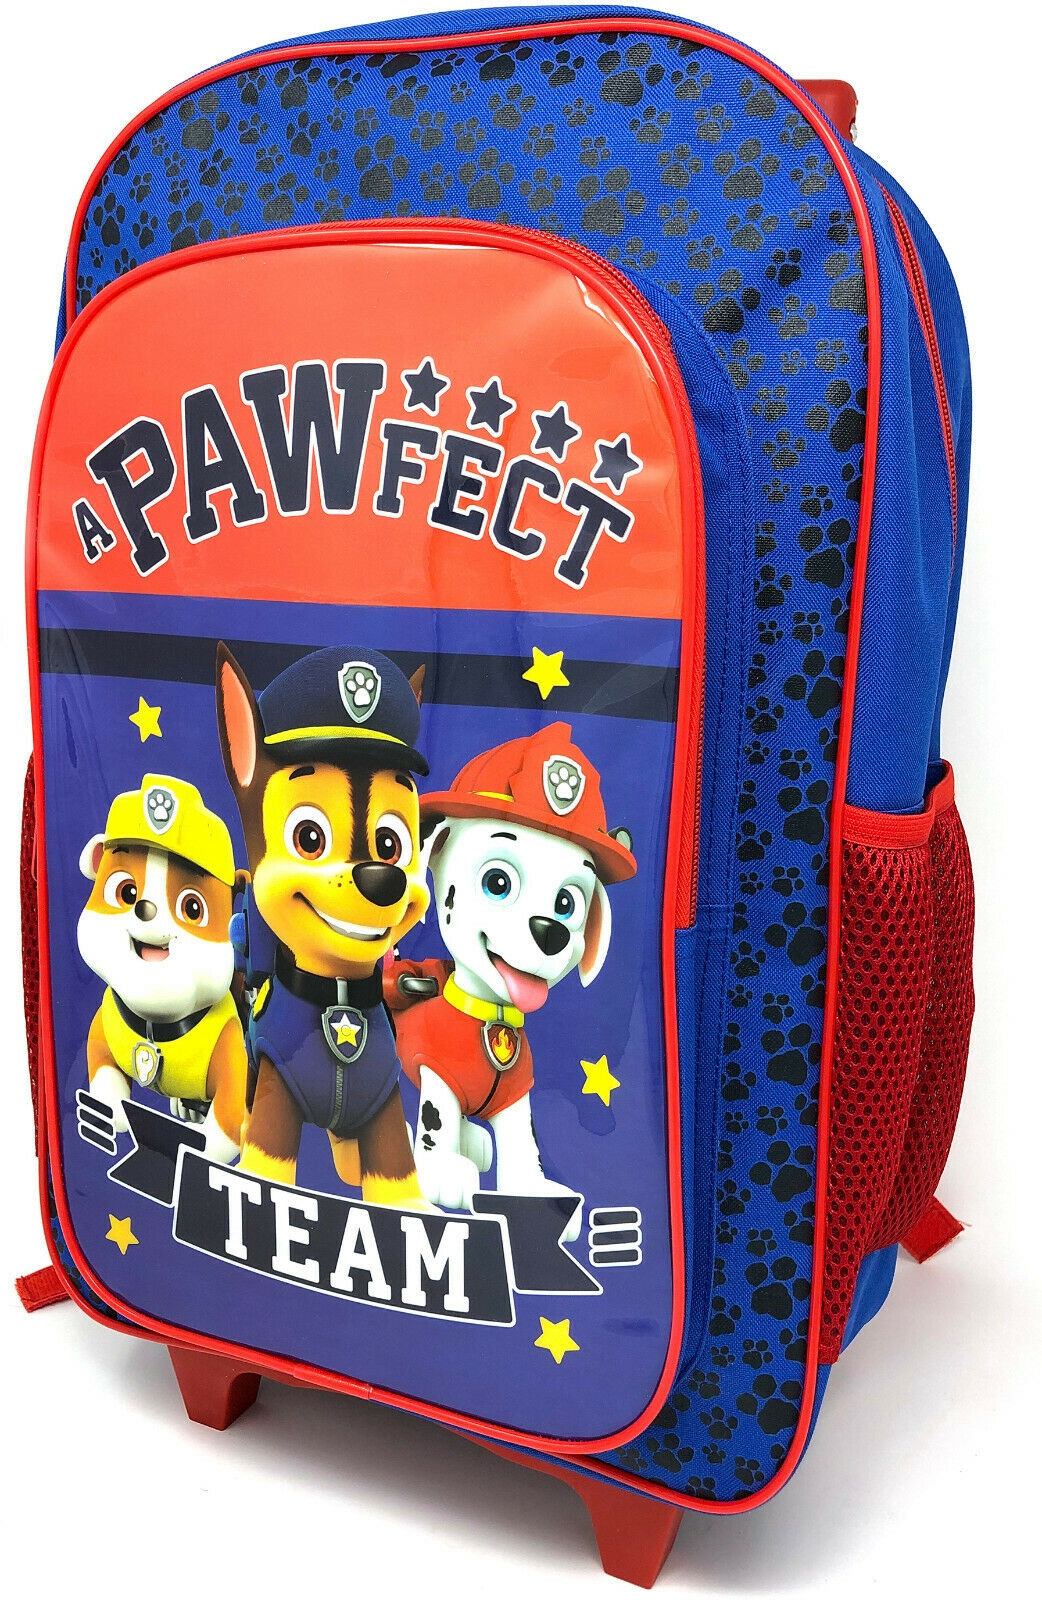 Paw Patrol Blue Luggage Deluxe School Travel Trolley Roller Wheeled Bag